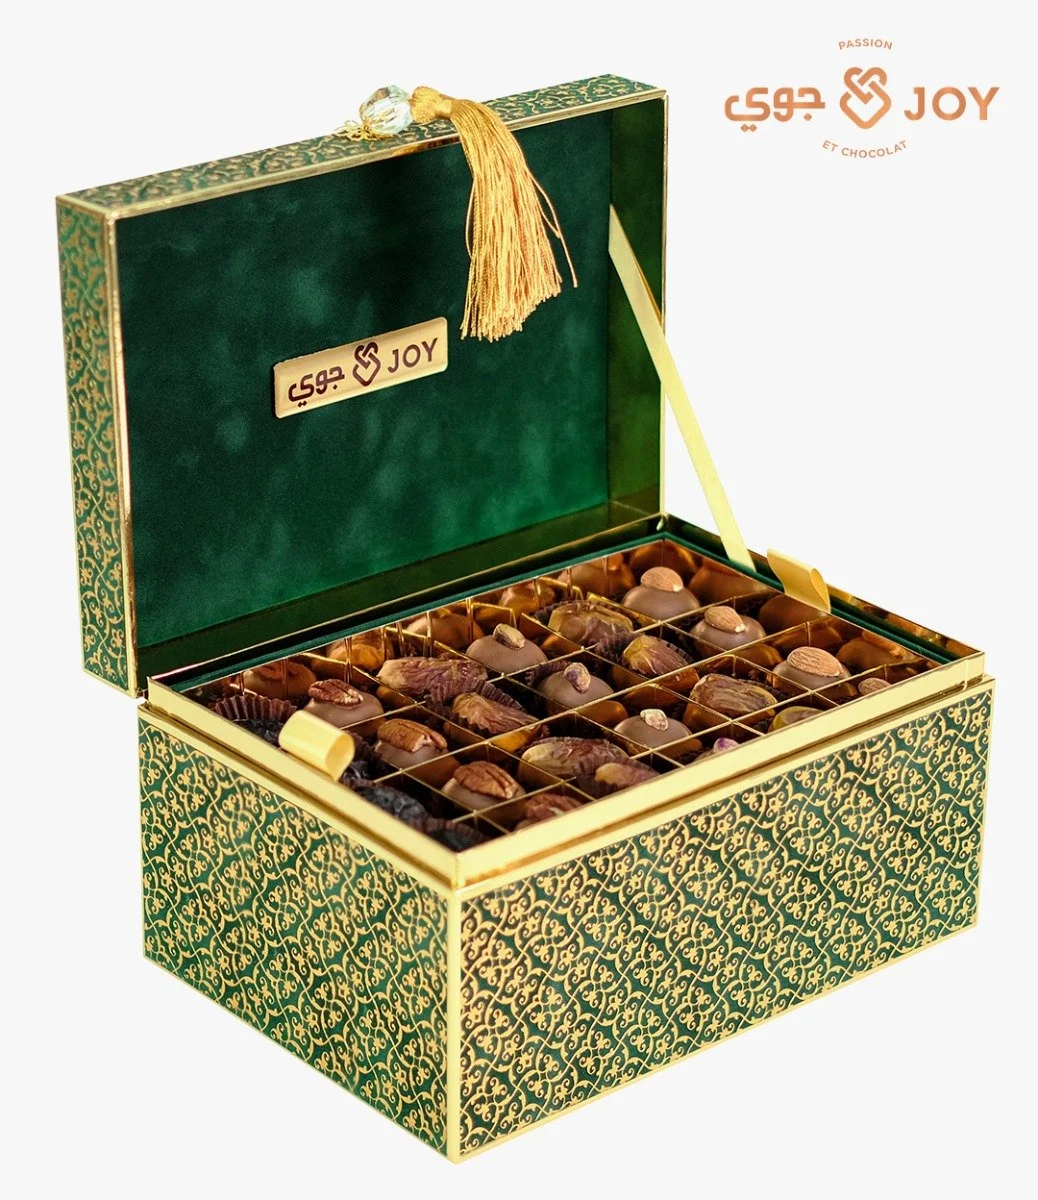 Two Layered Rectangular Box Green by Joy Chocolate